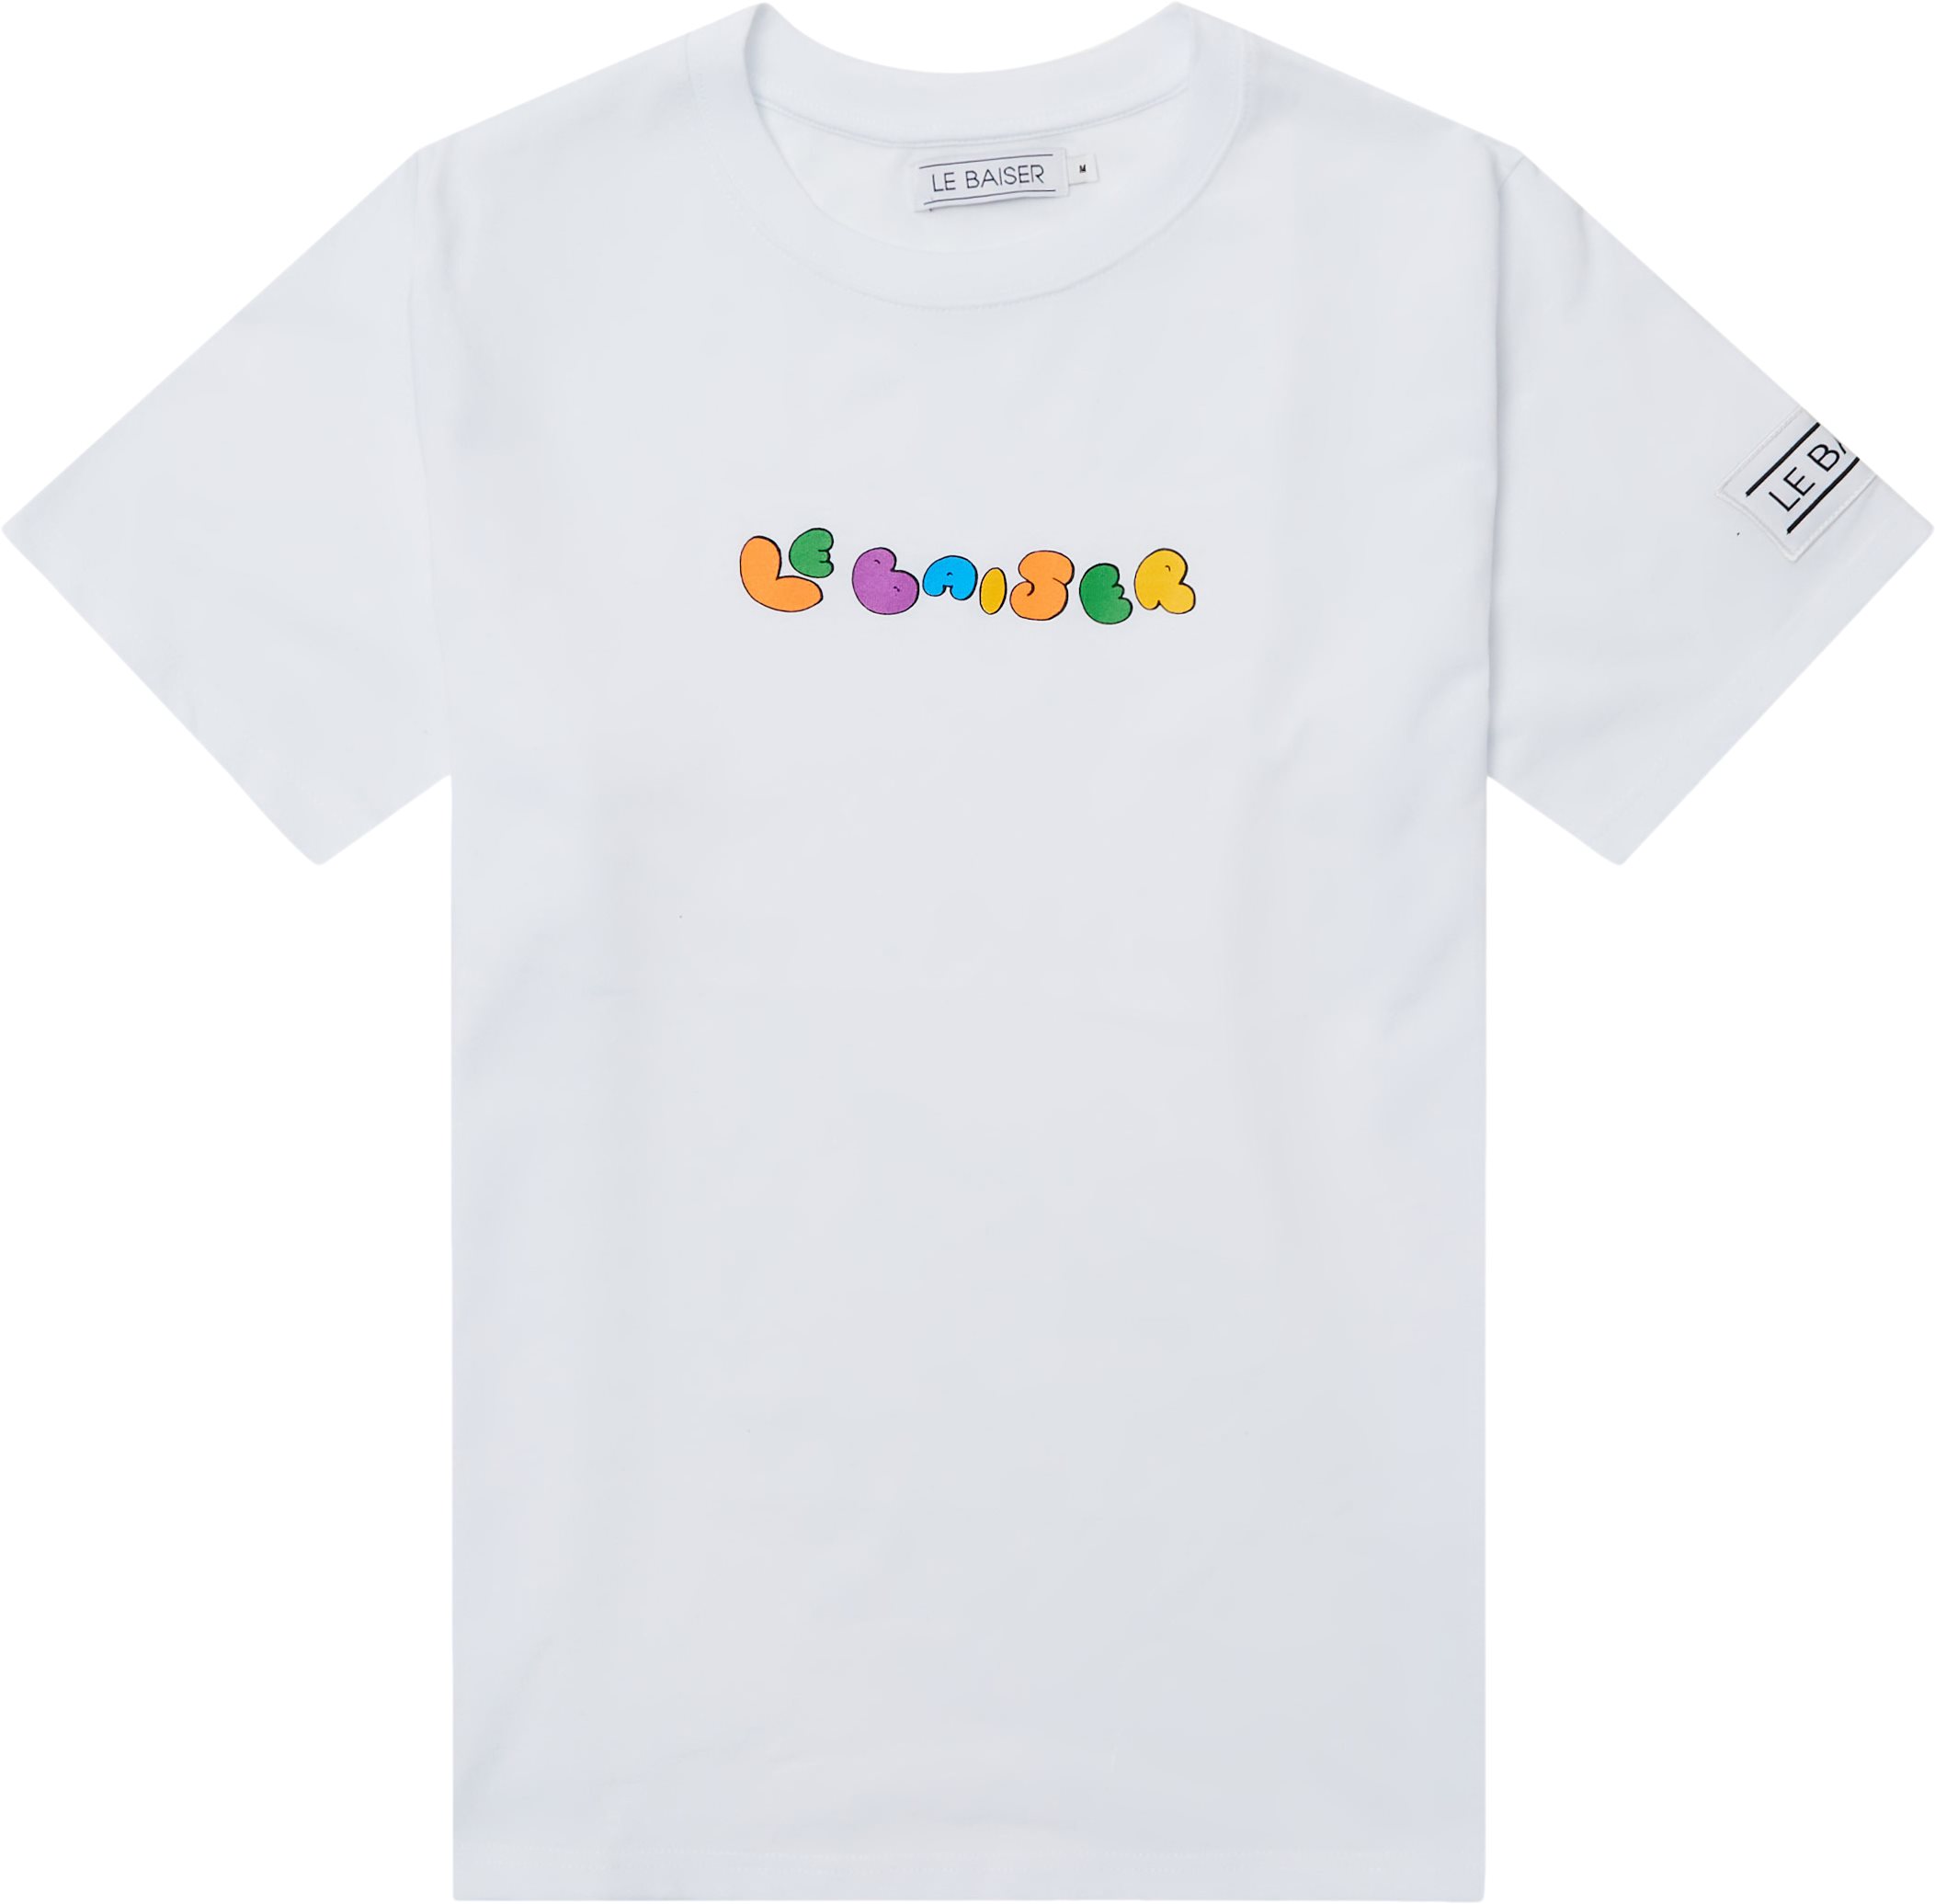 BIARRITZ T-shirt - T-shirts - Regular fit - White